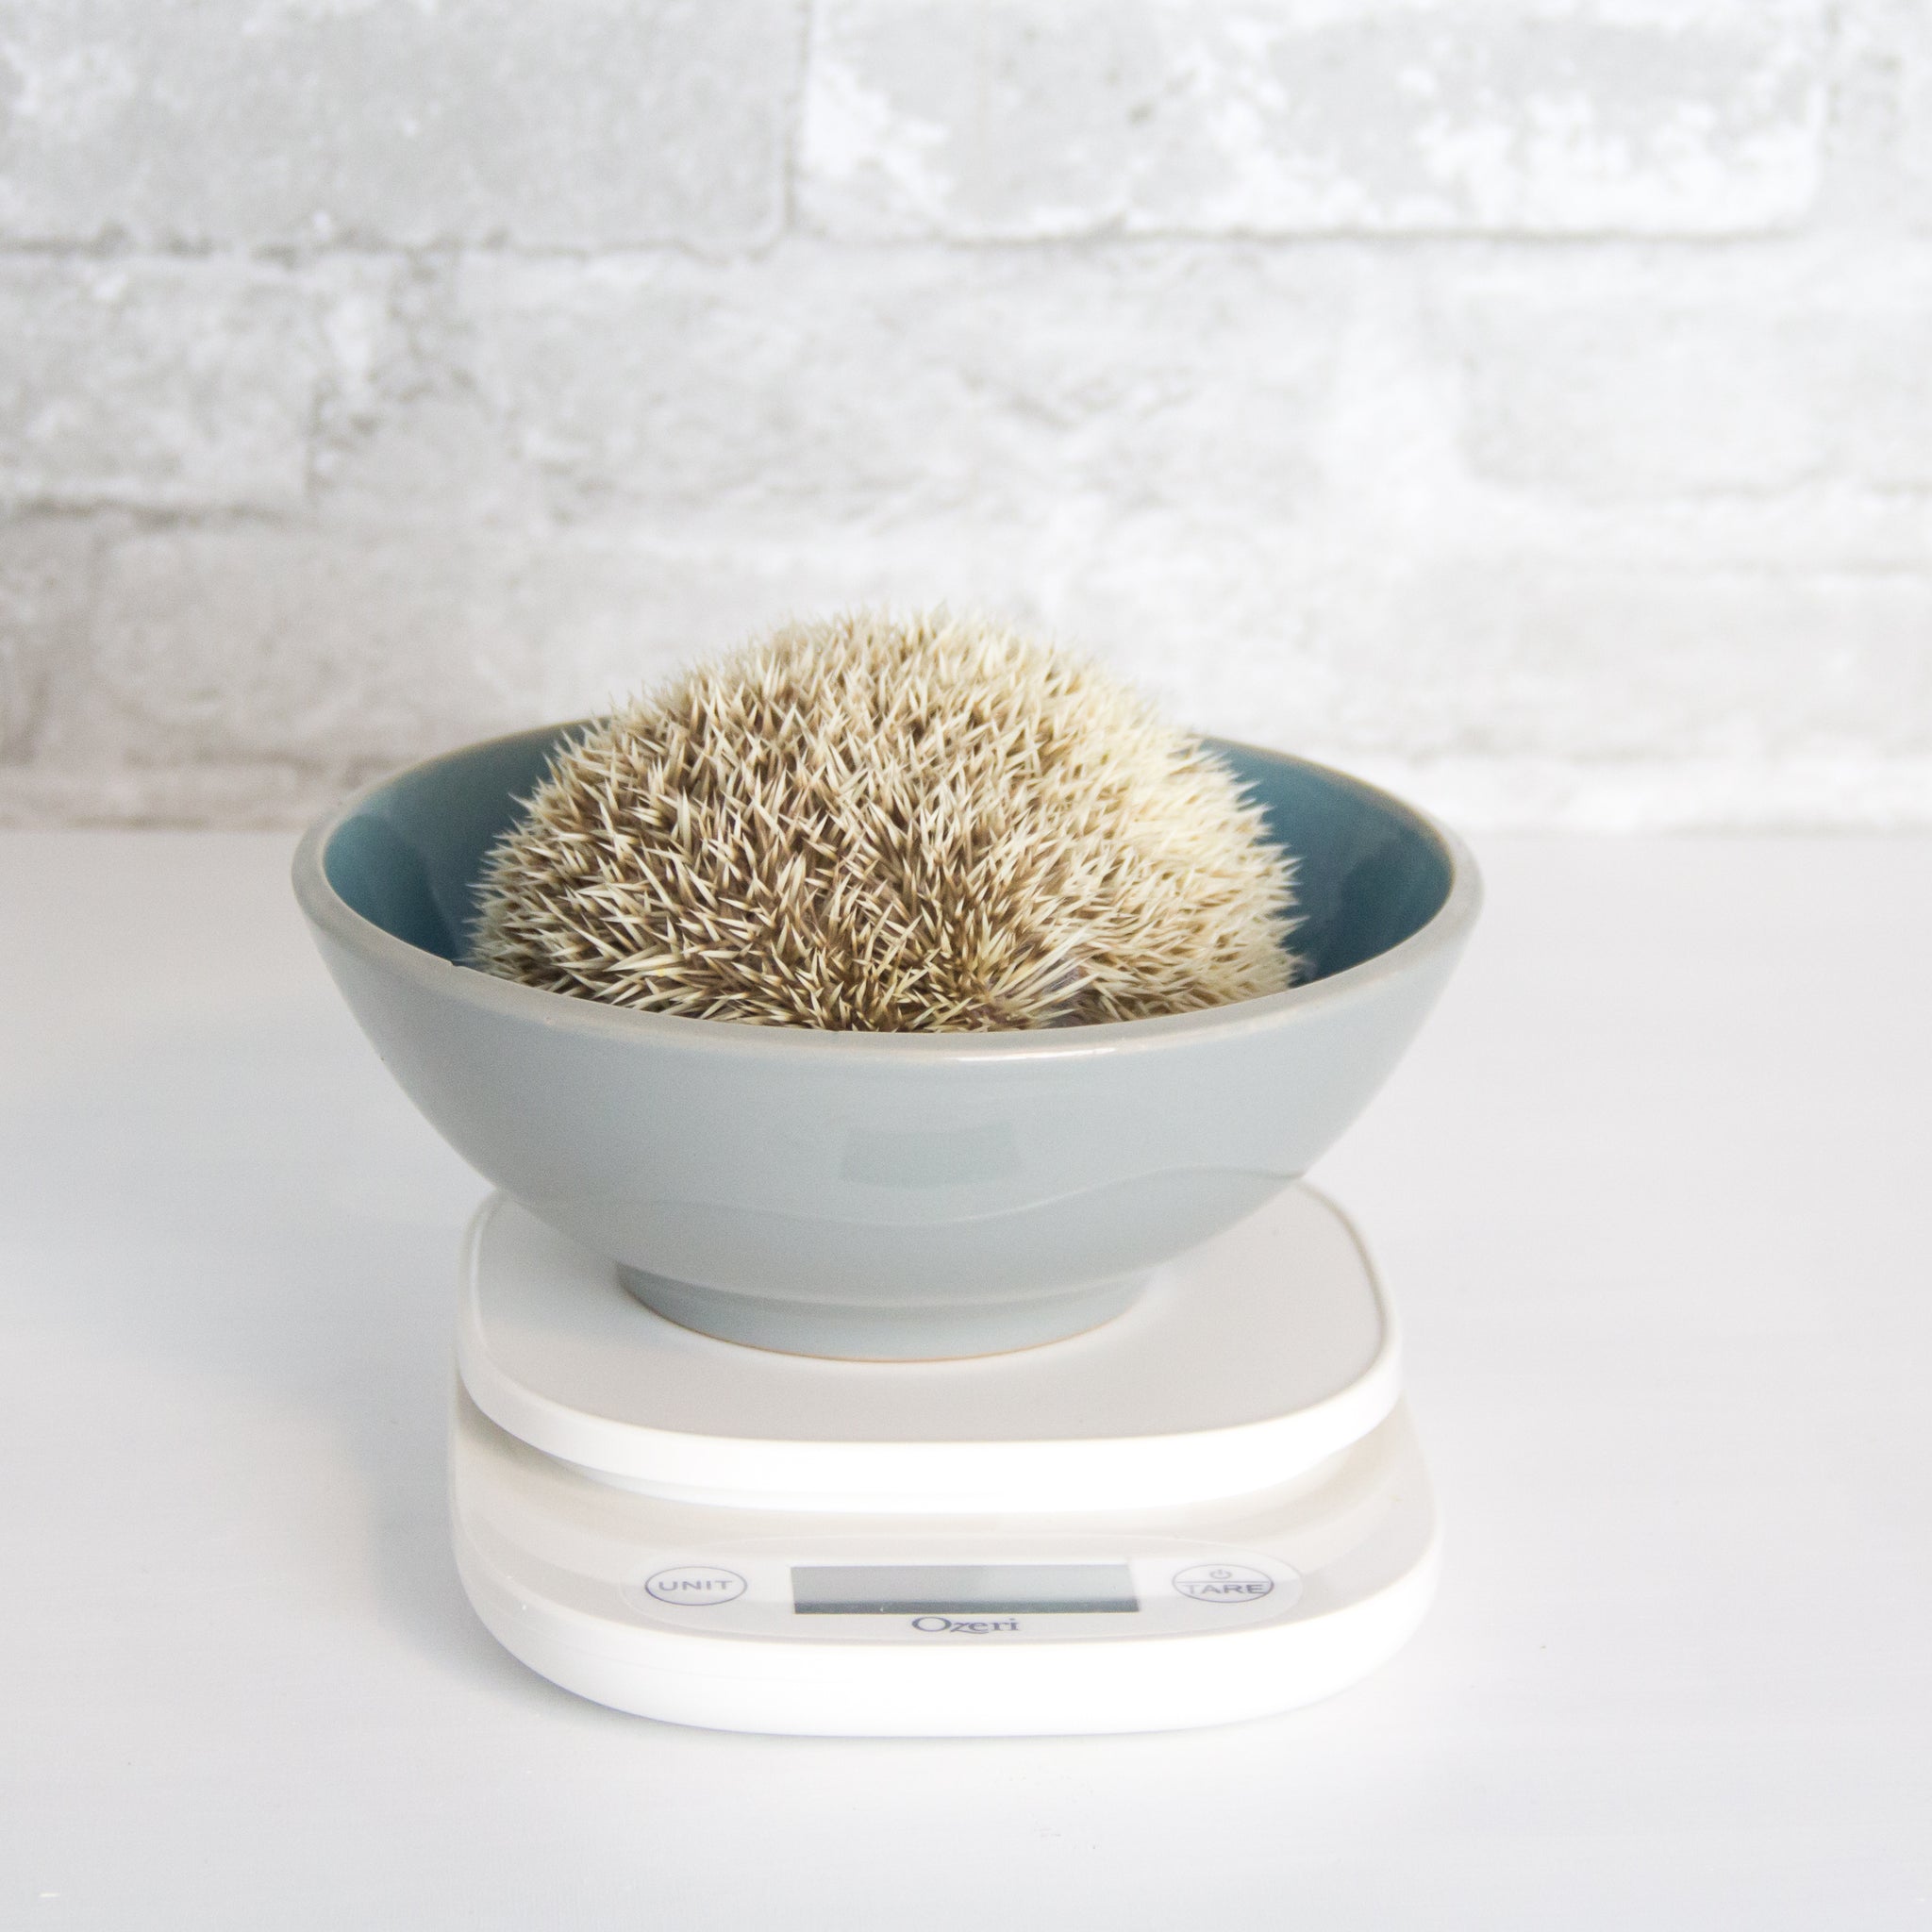 Digital Scale – Hedgehog & Exotic Pet Supplies